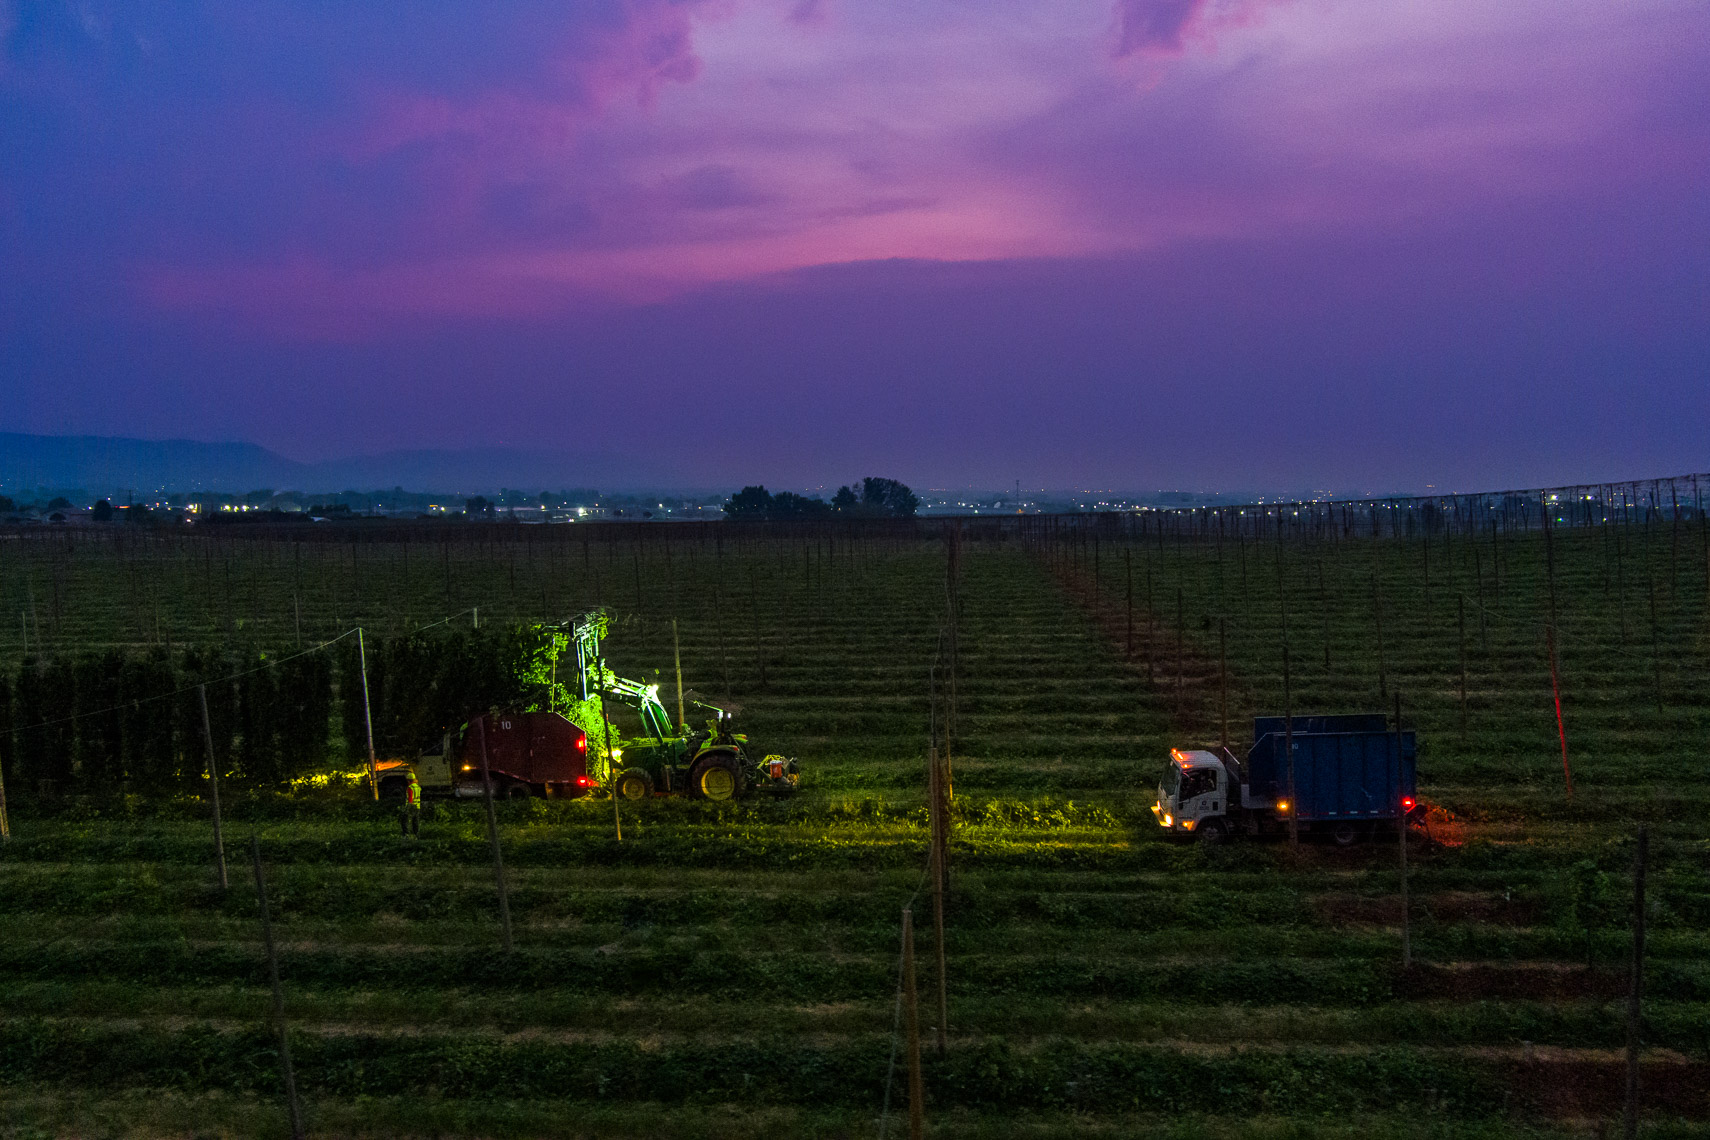 Night Harvesting